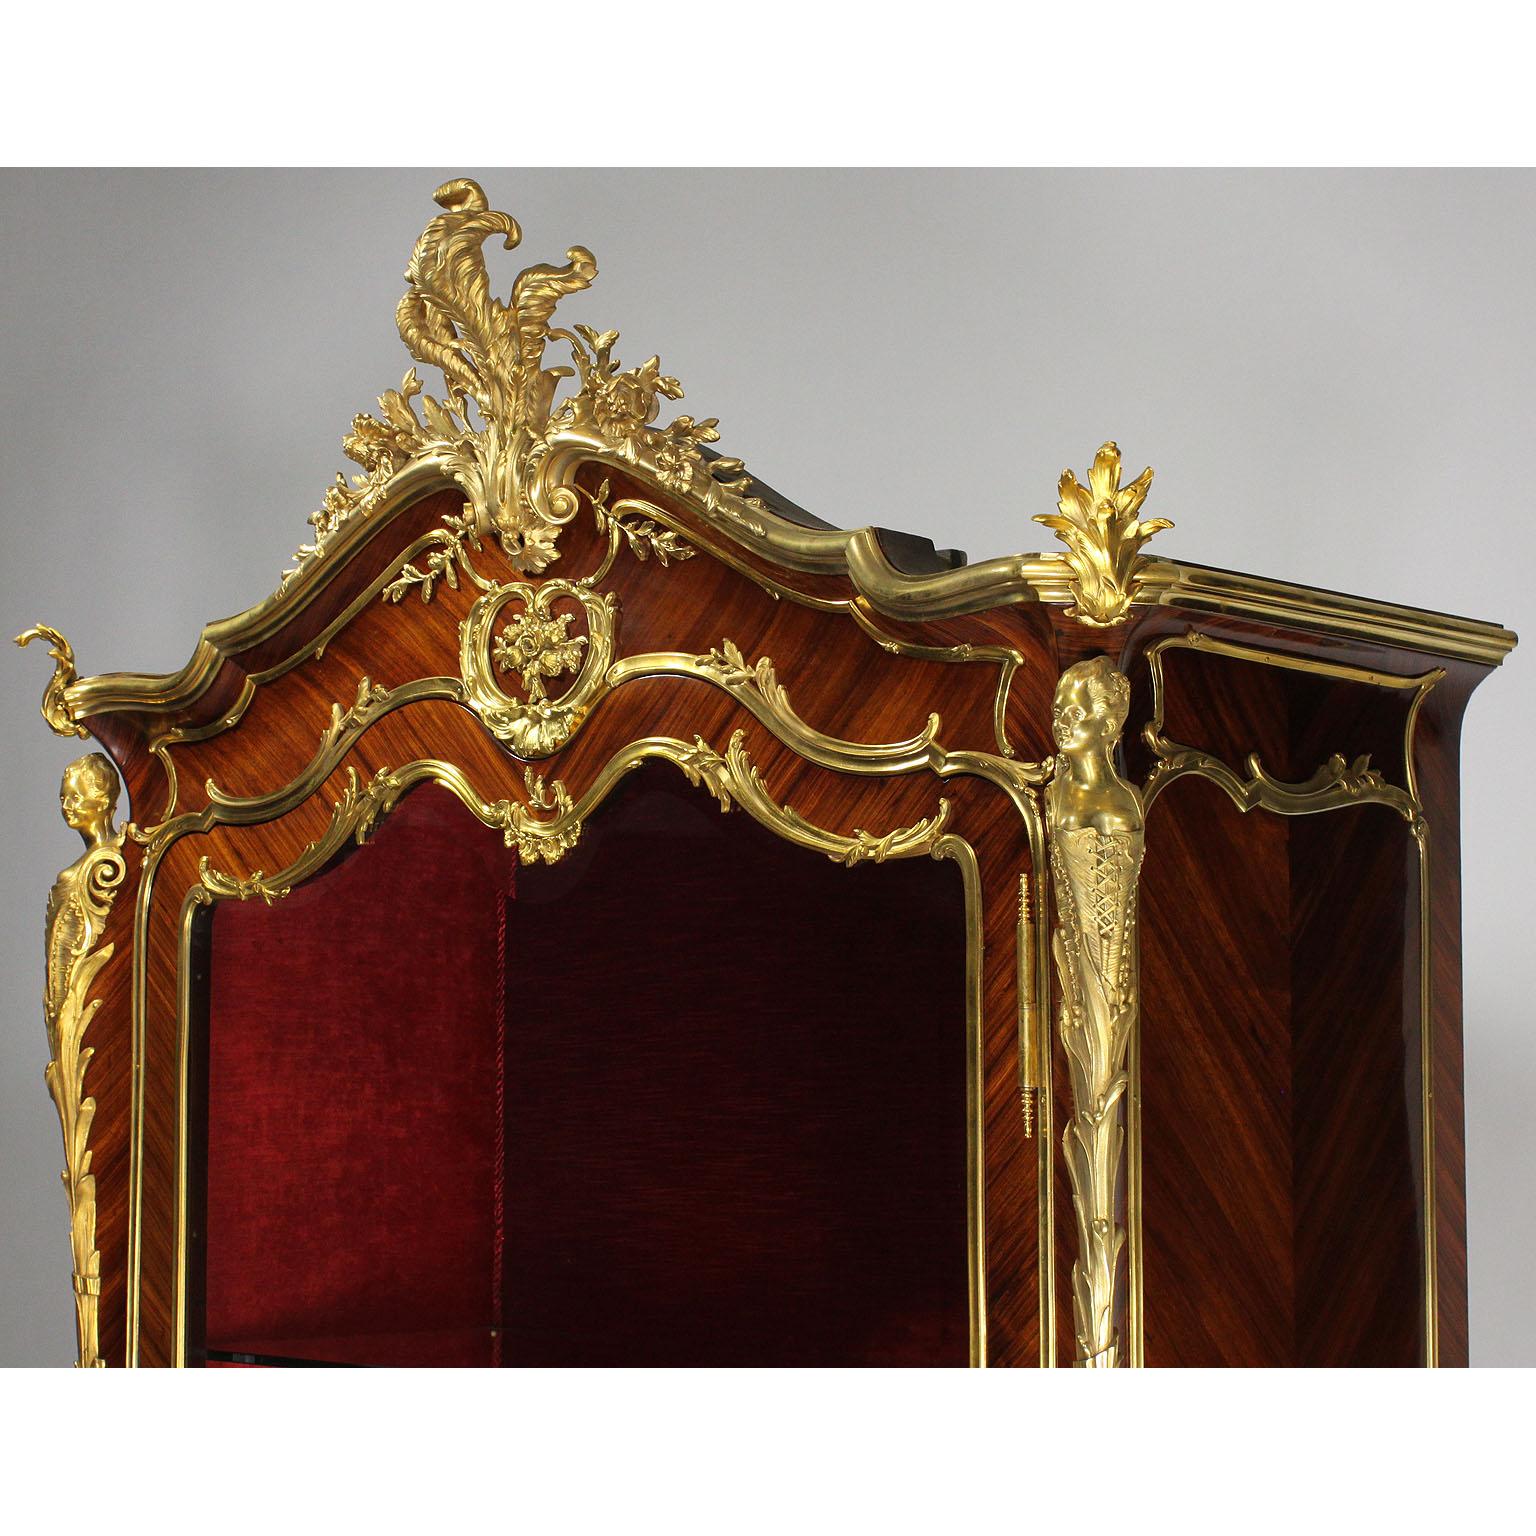 Cast French Louis XV Style Ormolu Mounted Kingwood Figural Vitrine by François Linke For Sale